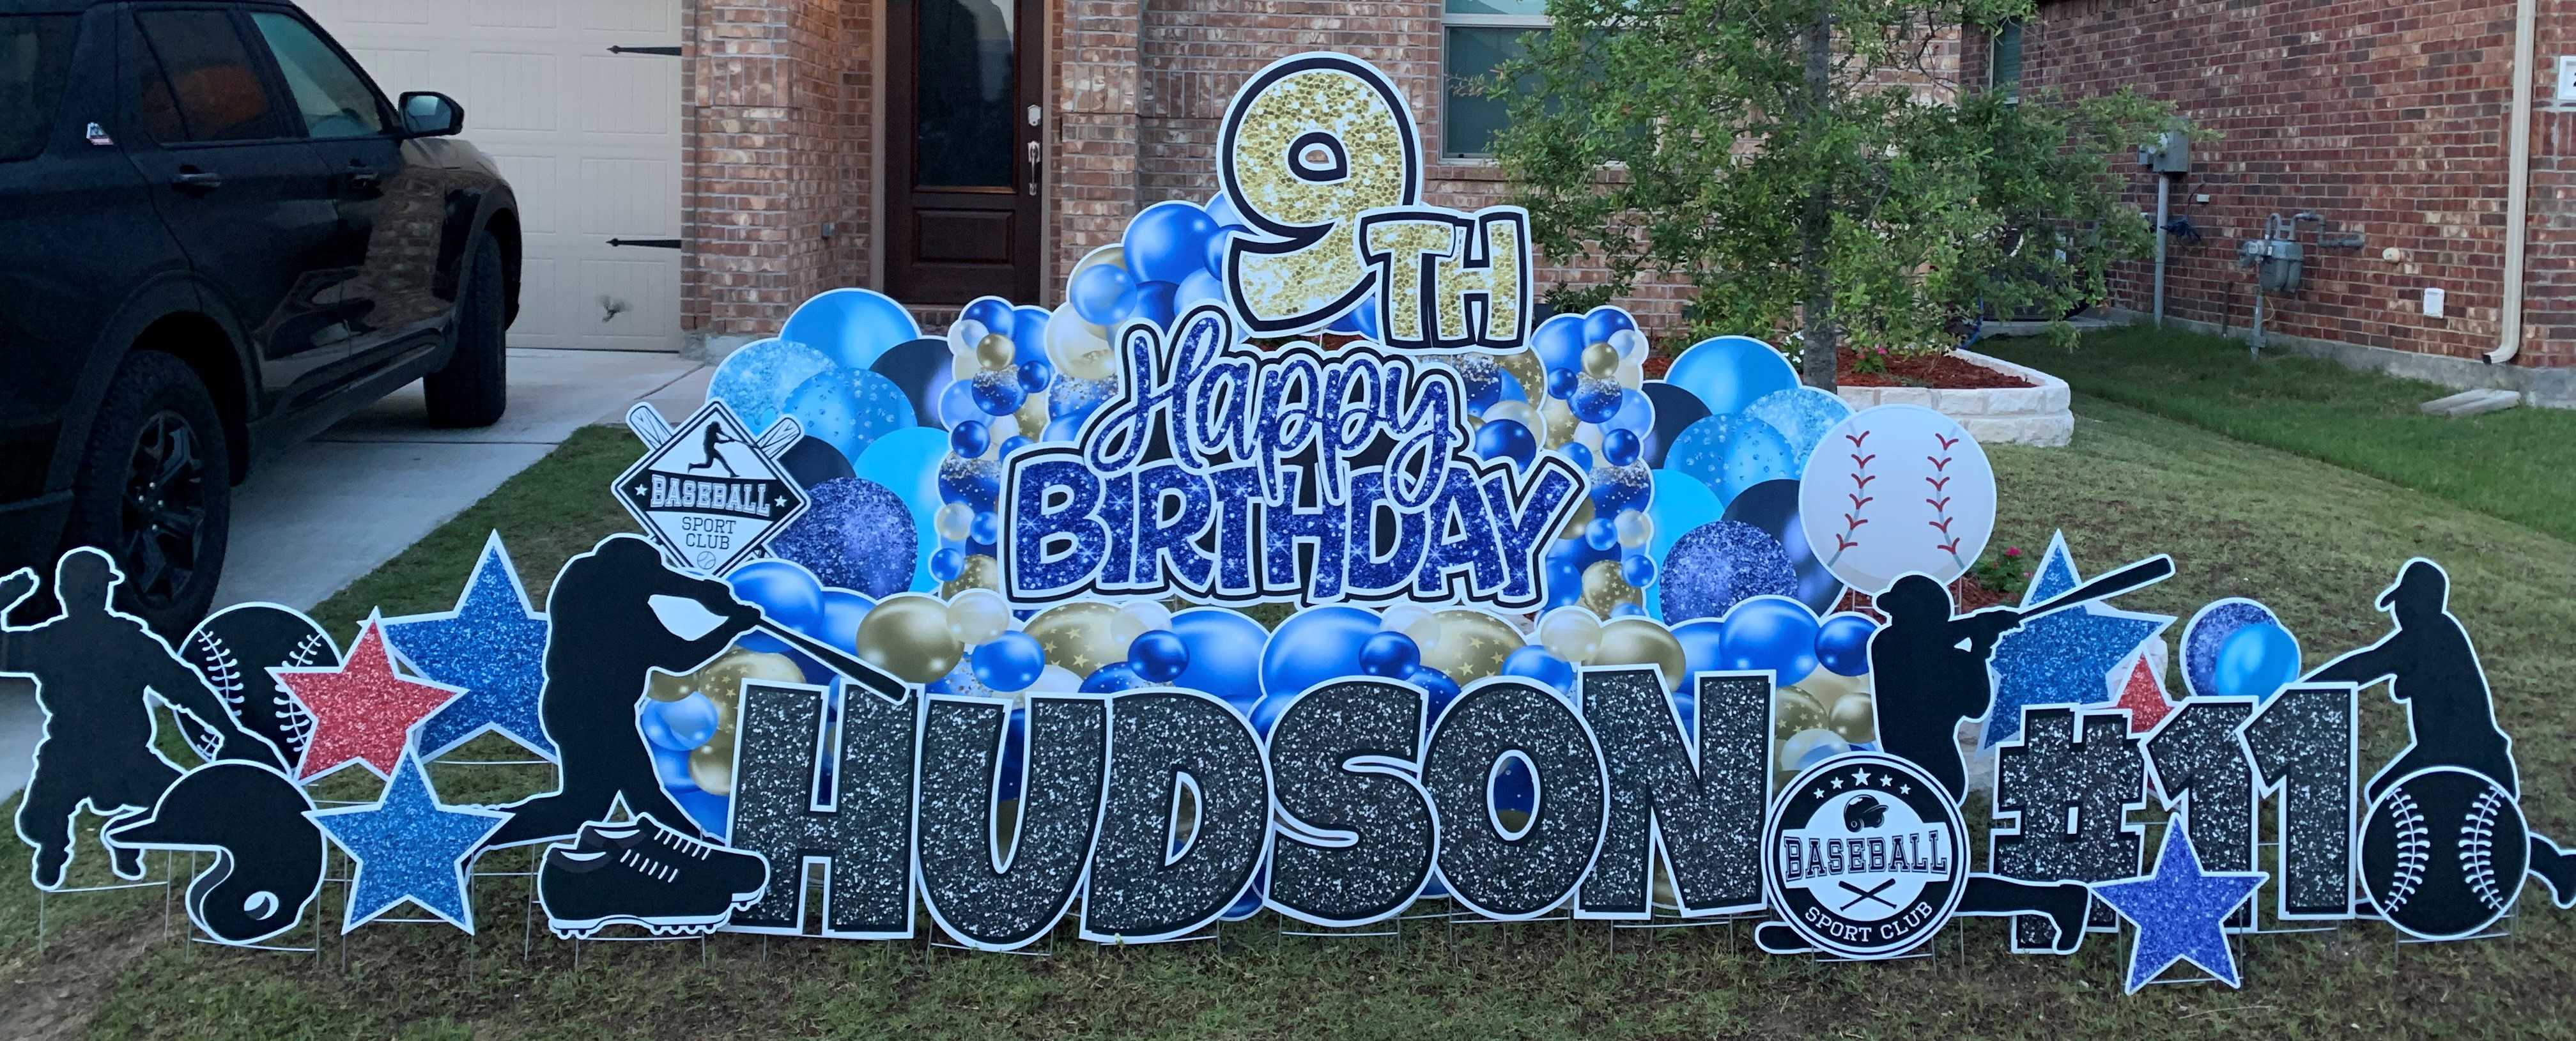 Yard card sign happy birthday hudson 